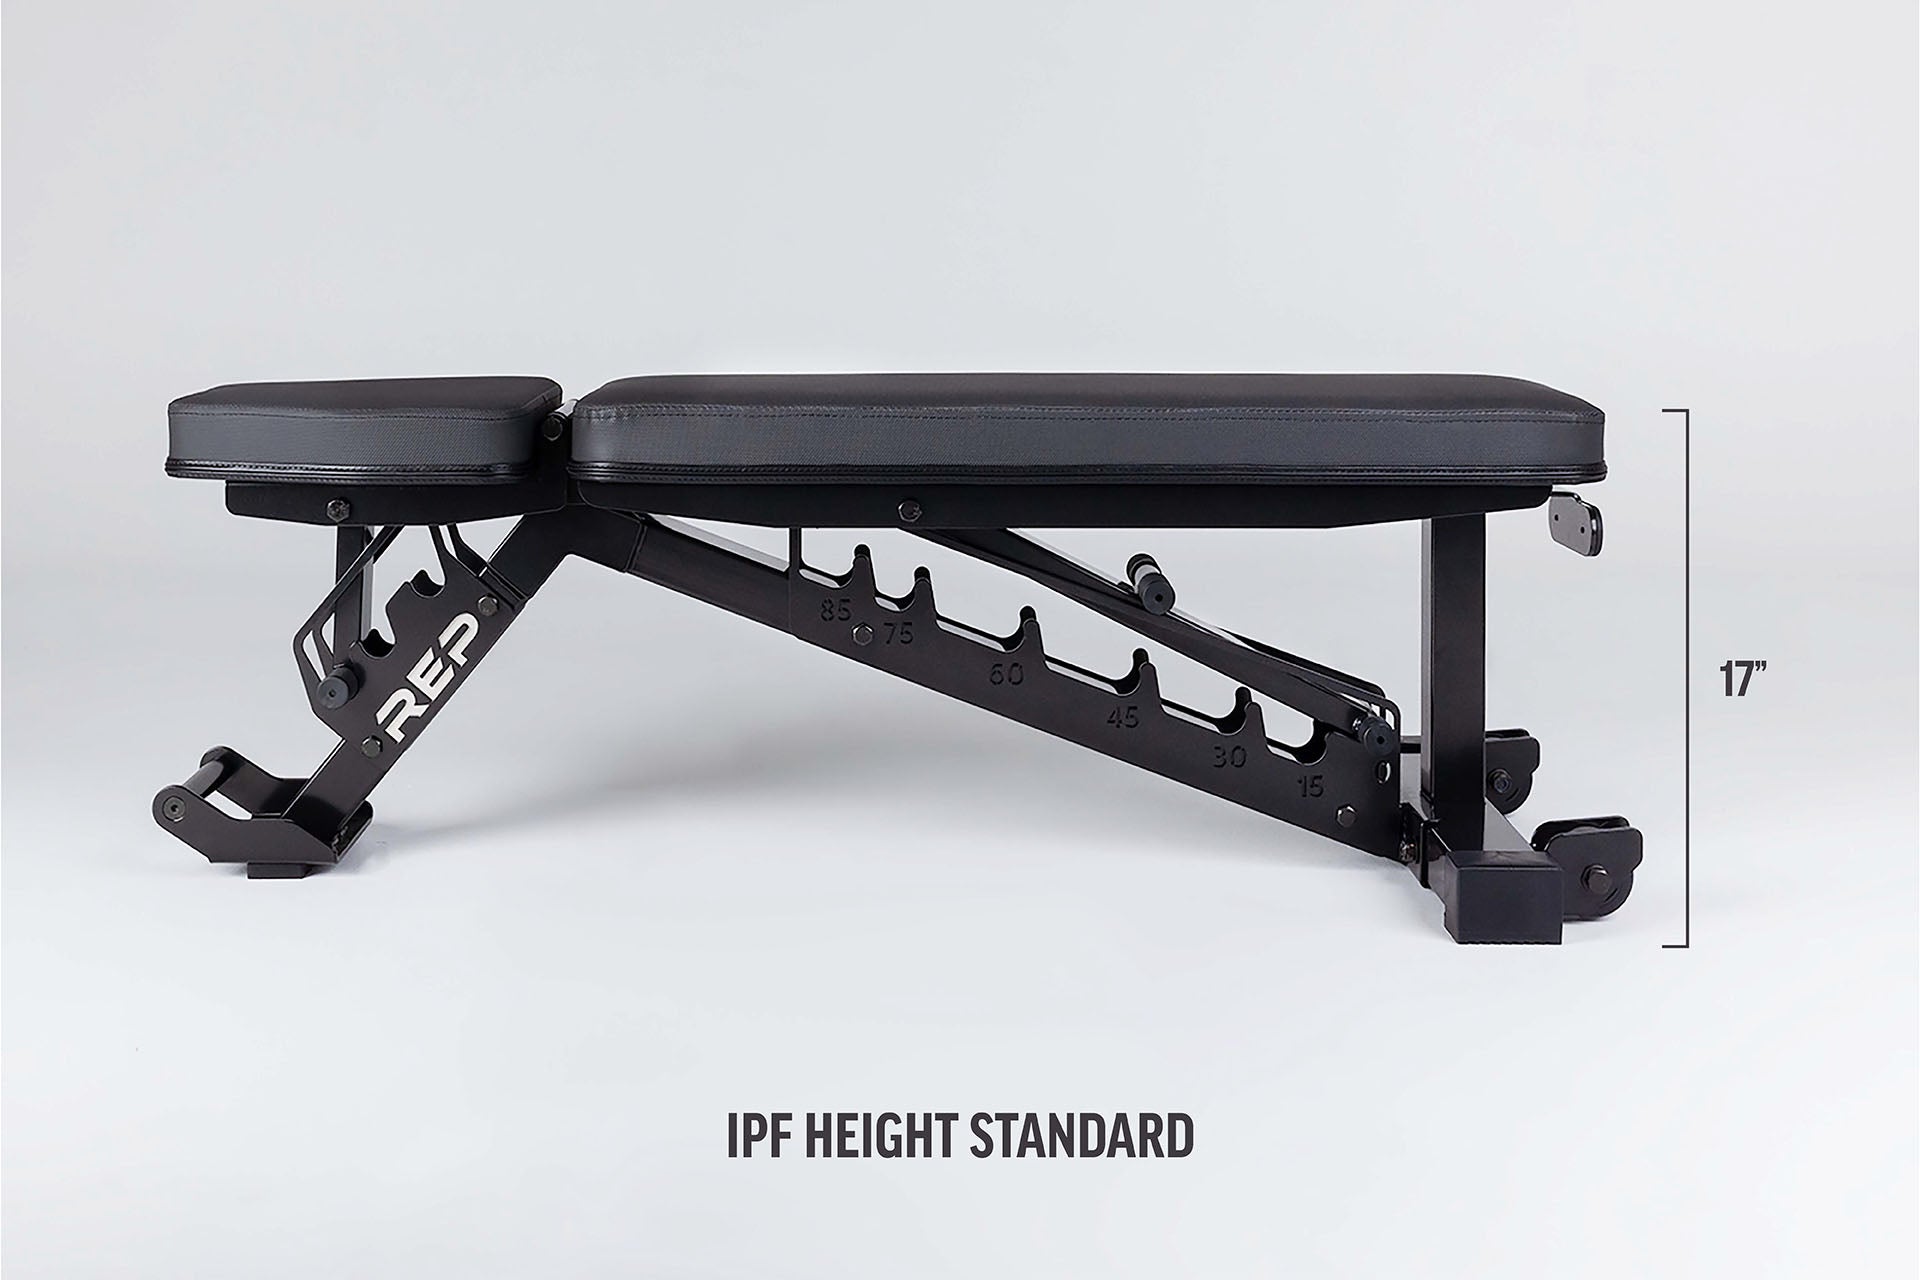 IPF Height Standard Metallic Black AB-4100 Bench